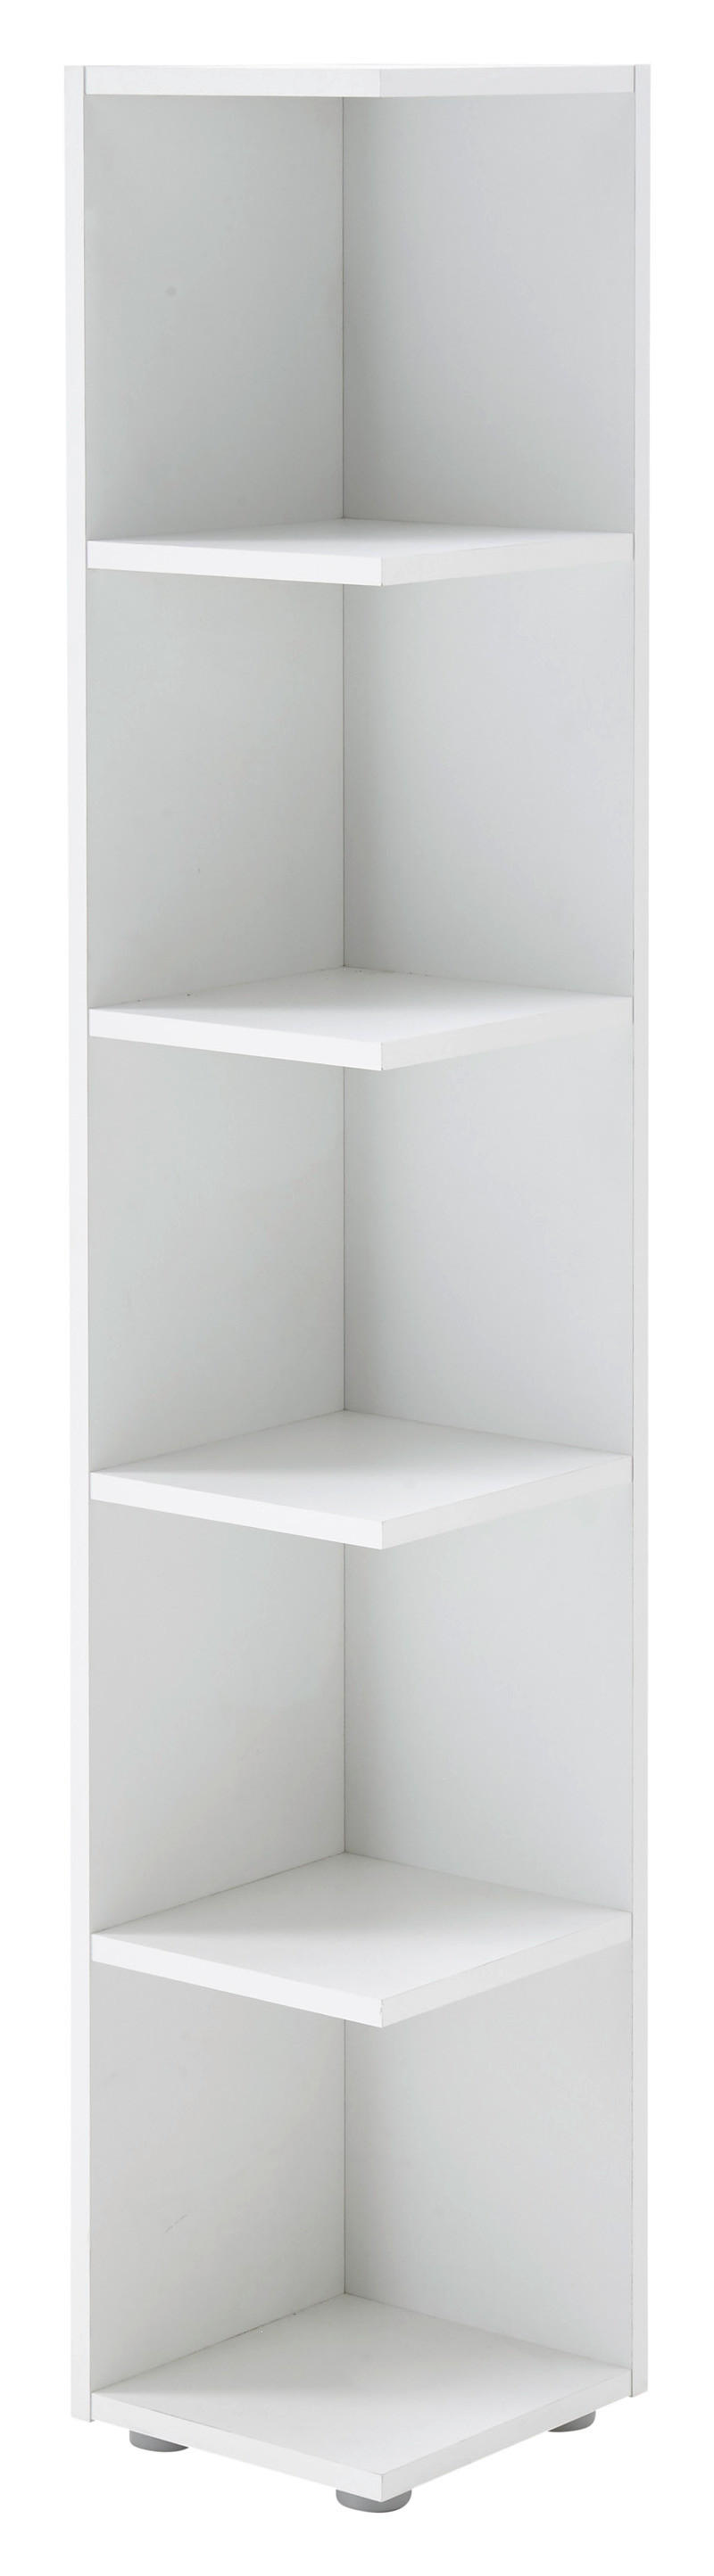 ECKREGAL Weiß  - Weiß/Grau, Basics, Holzwerkstoff/Kunststoff (24/142/26cm) - MID.YOU